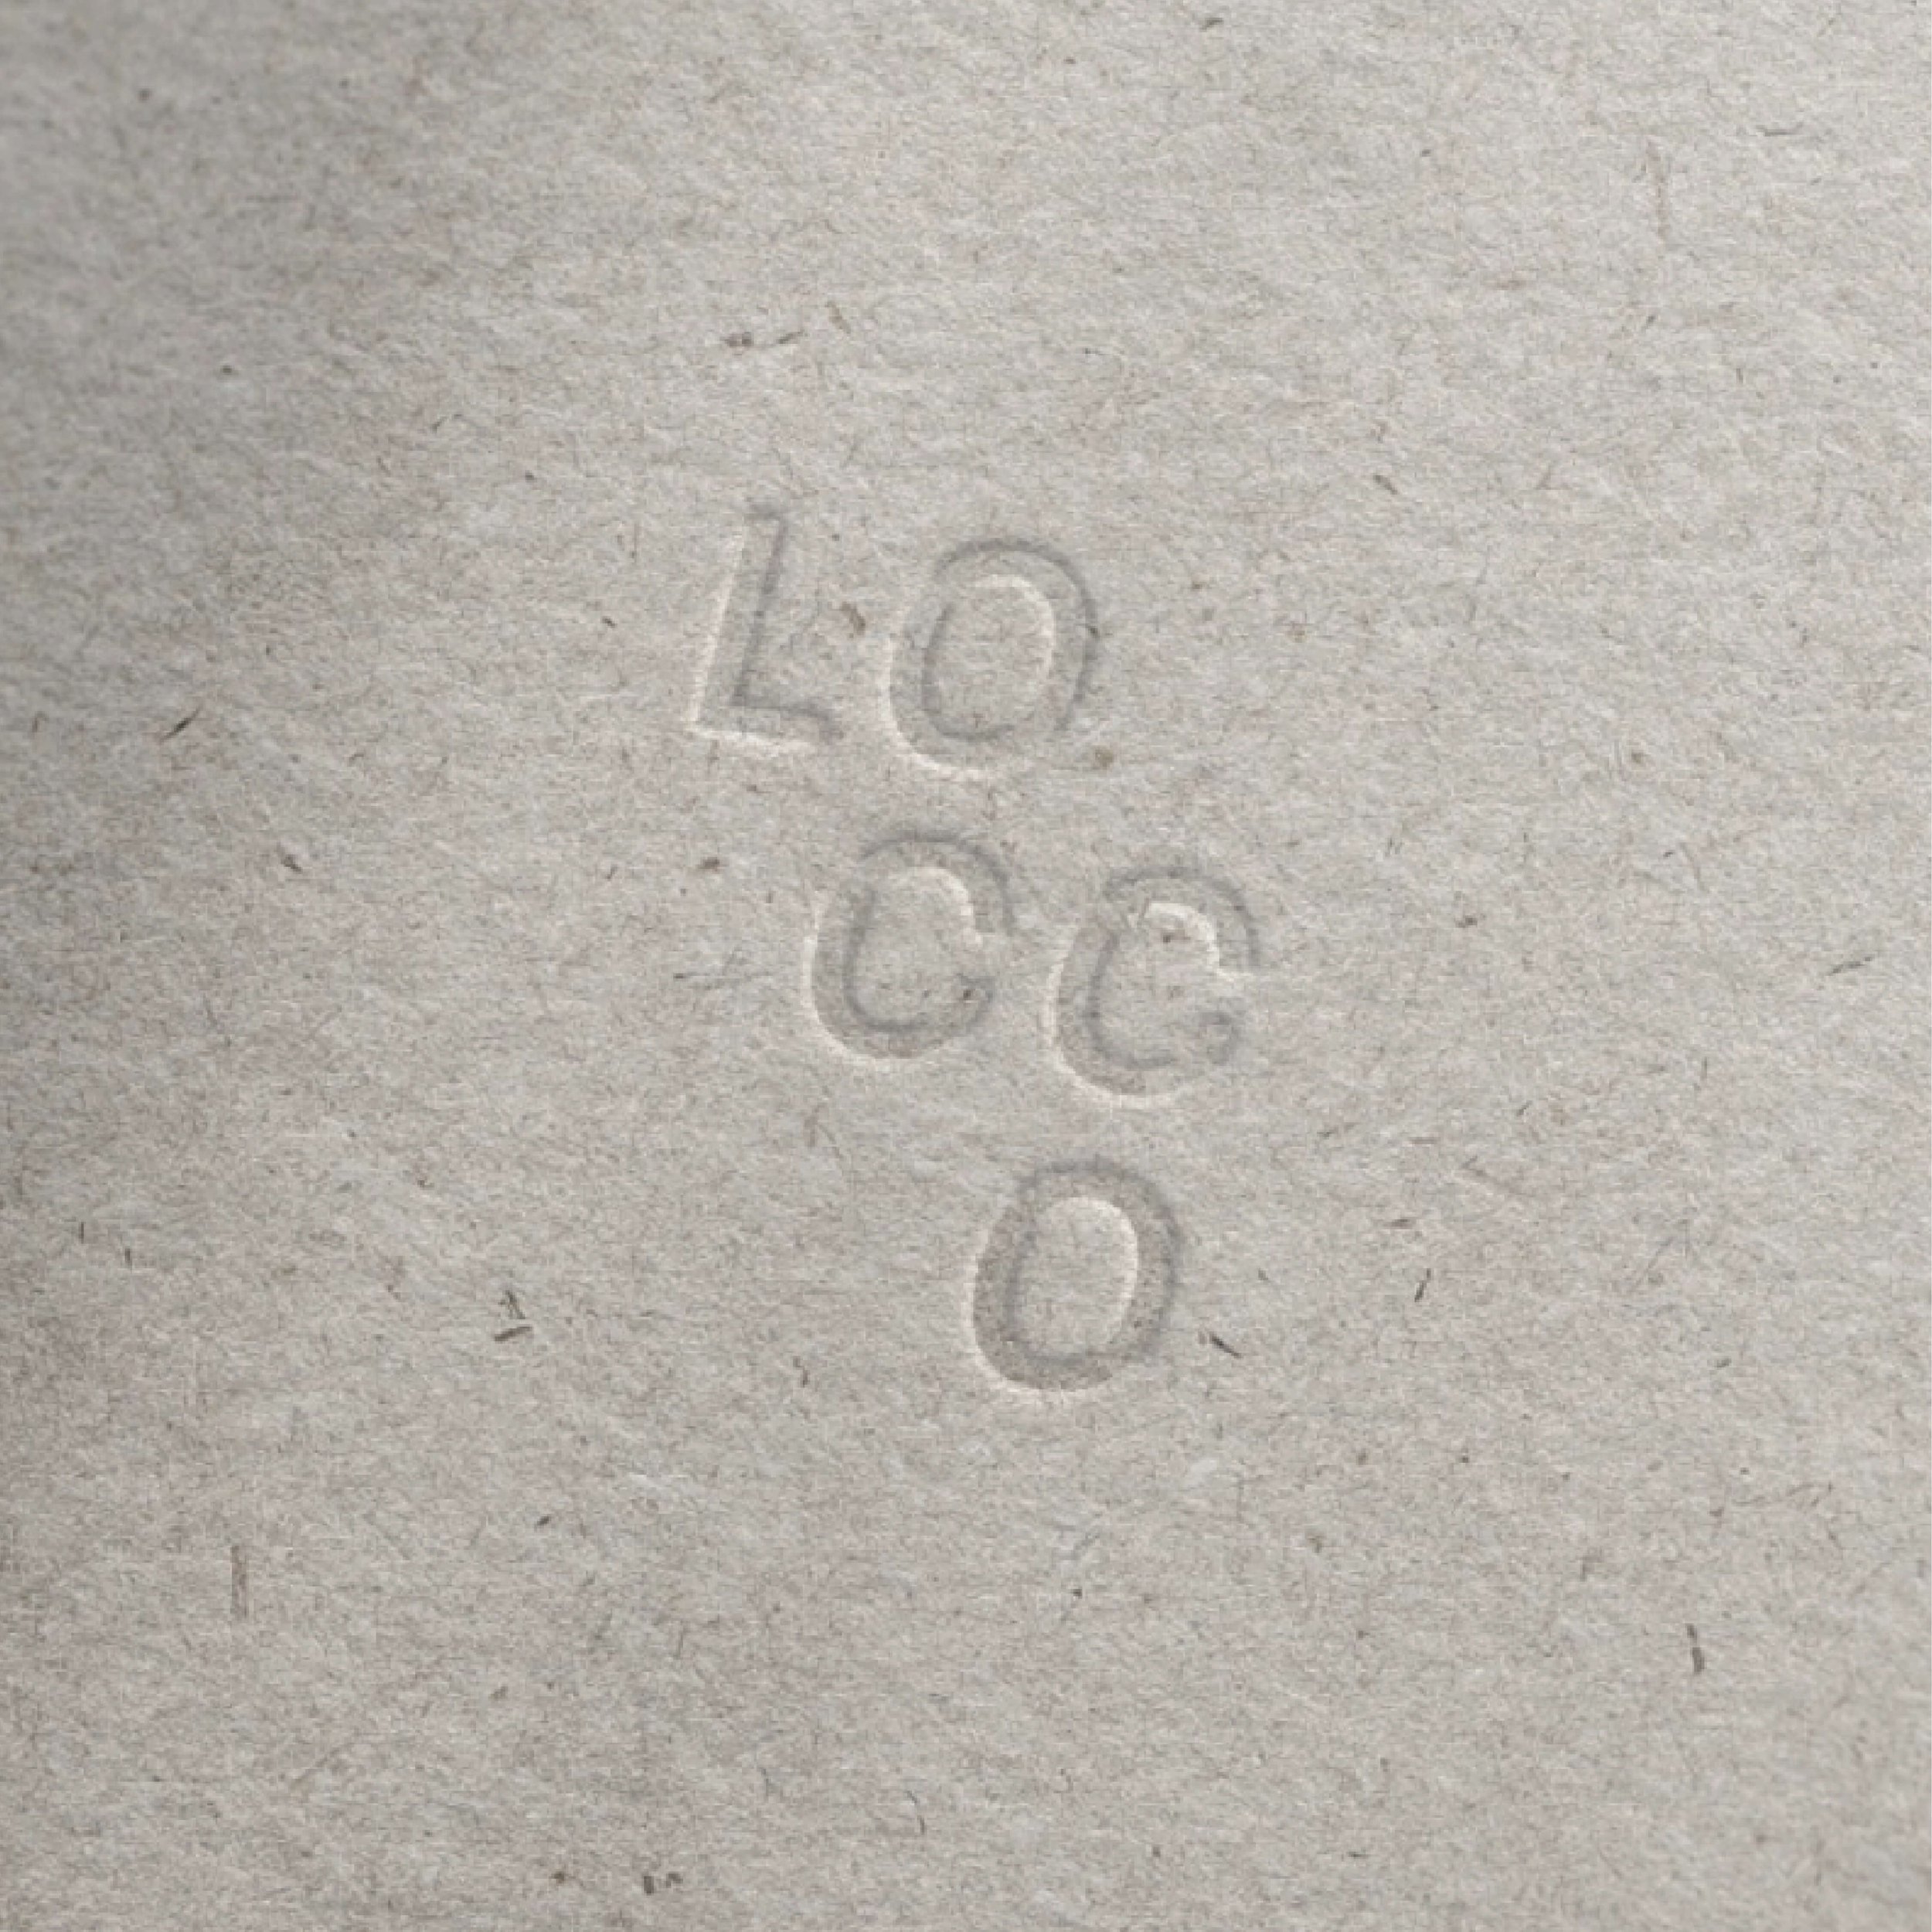 Locco Studio-04.jpg